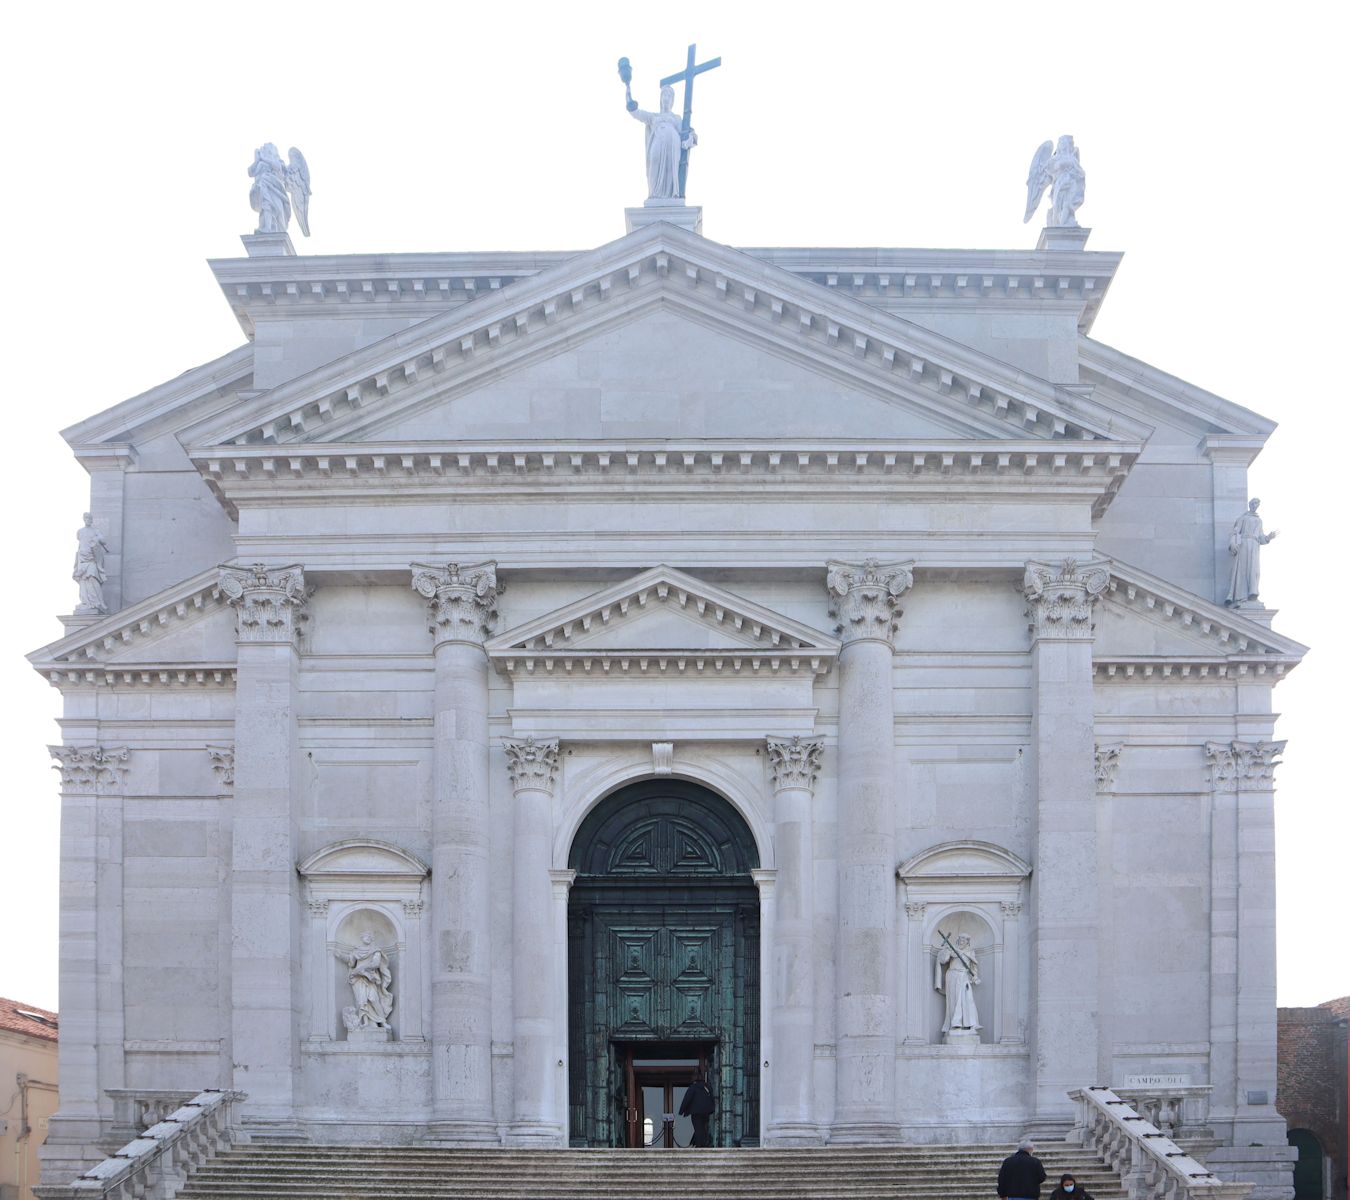 Kirche Santissimo Redentore in Venedig